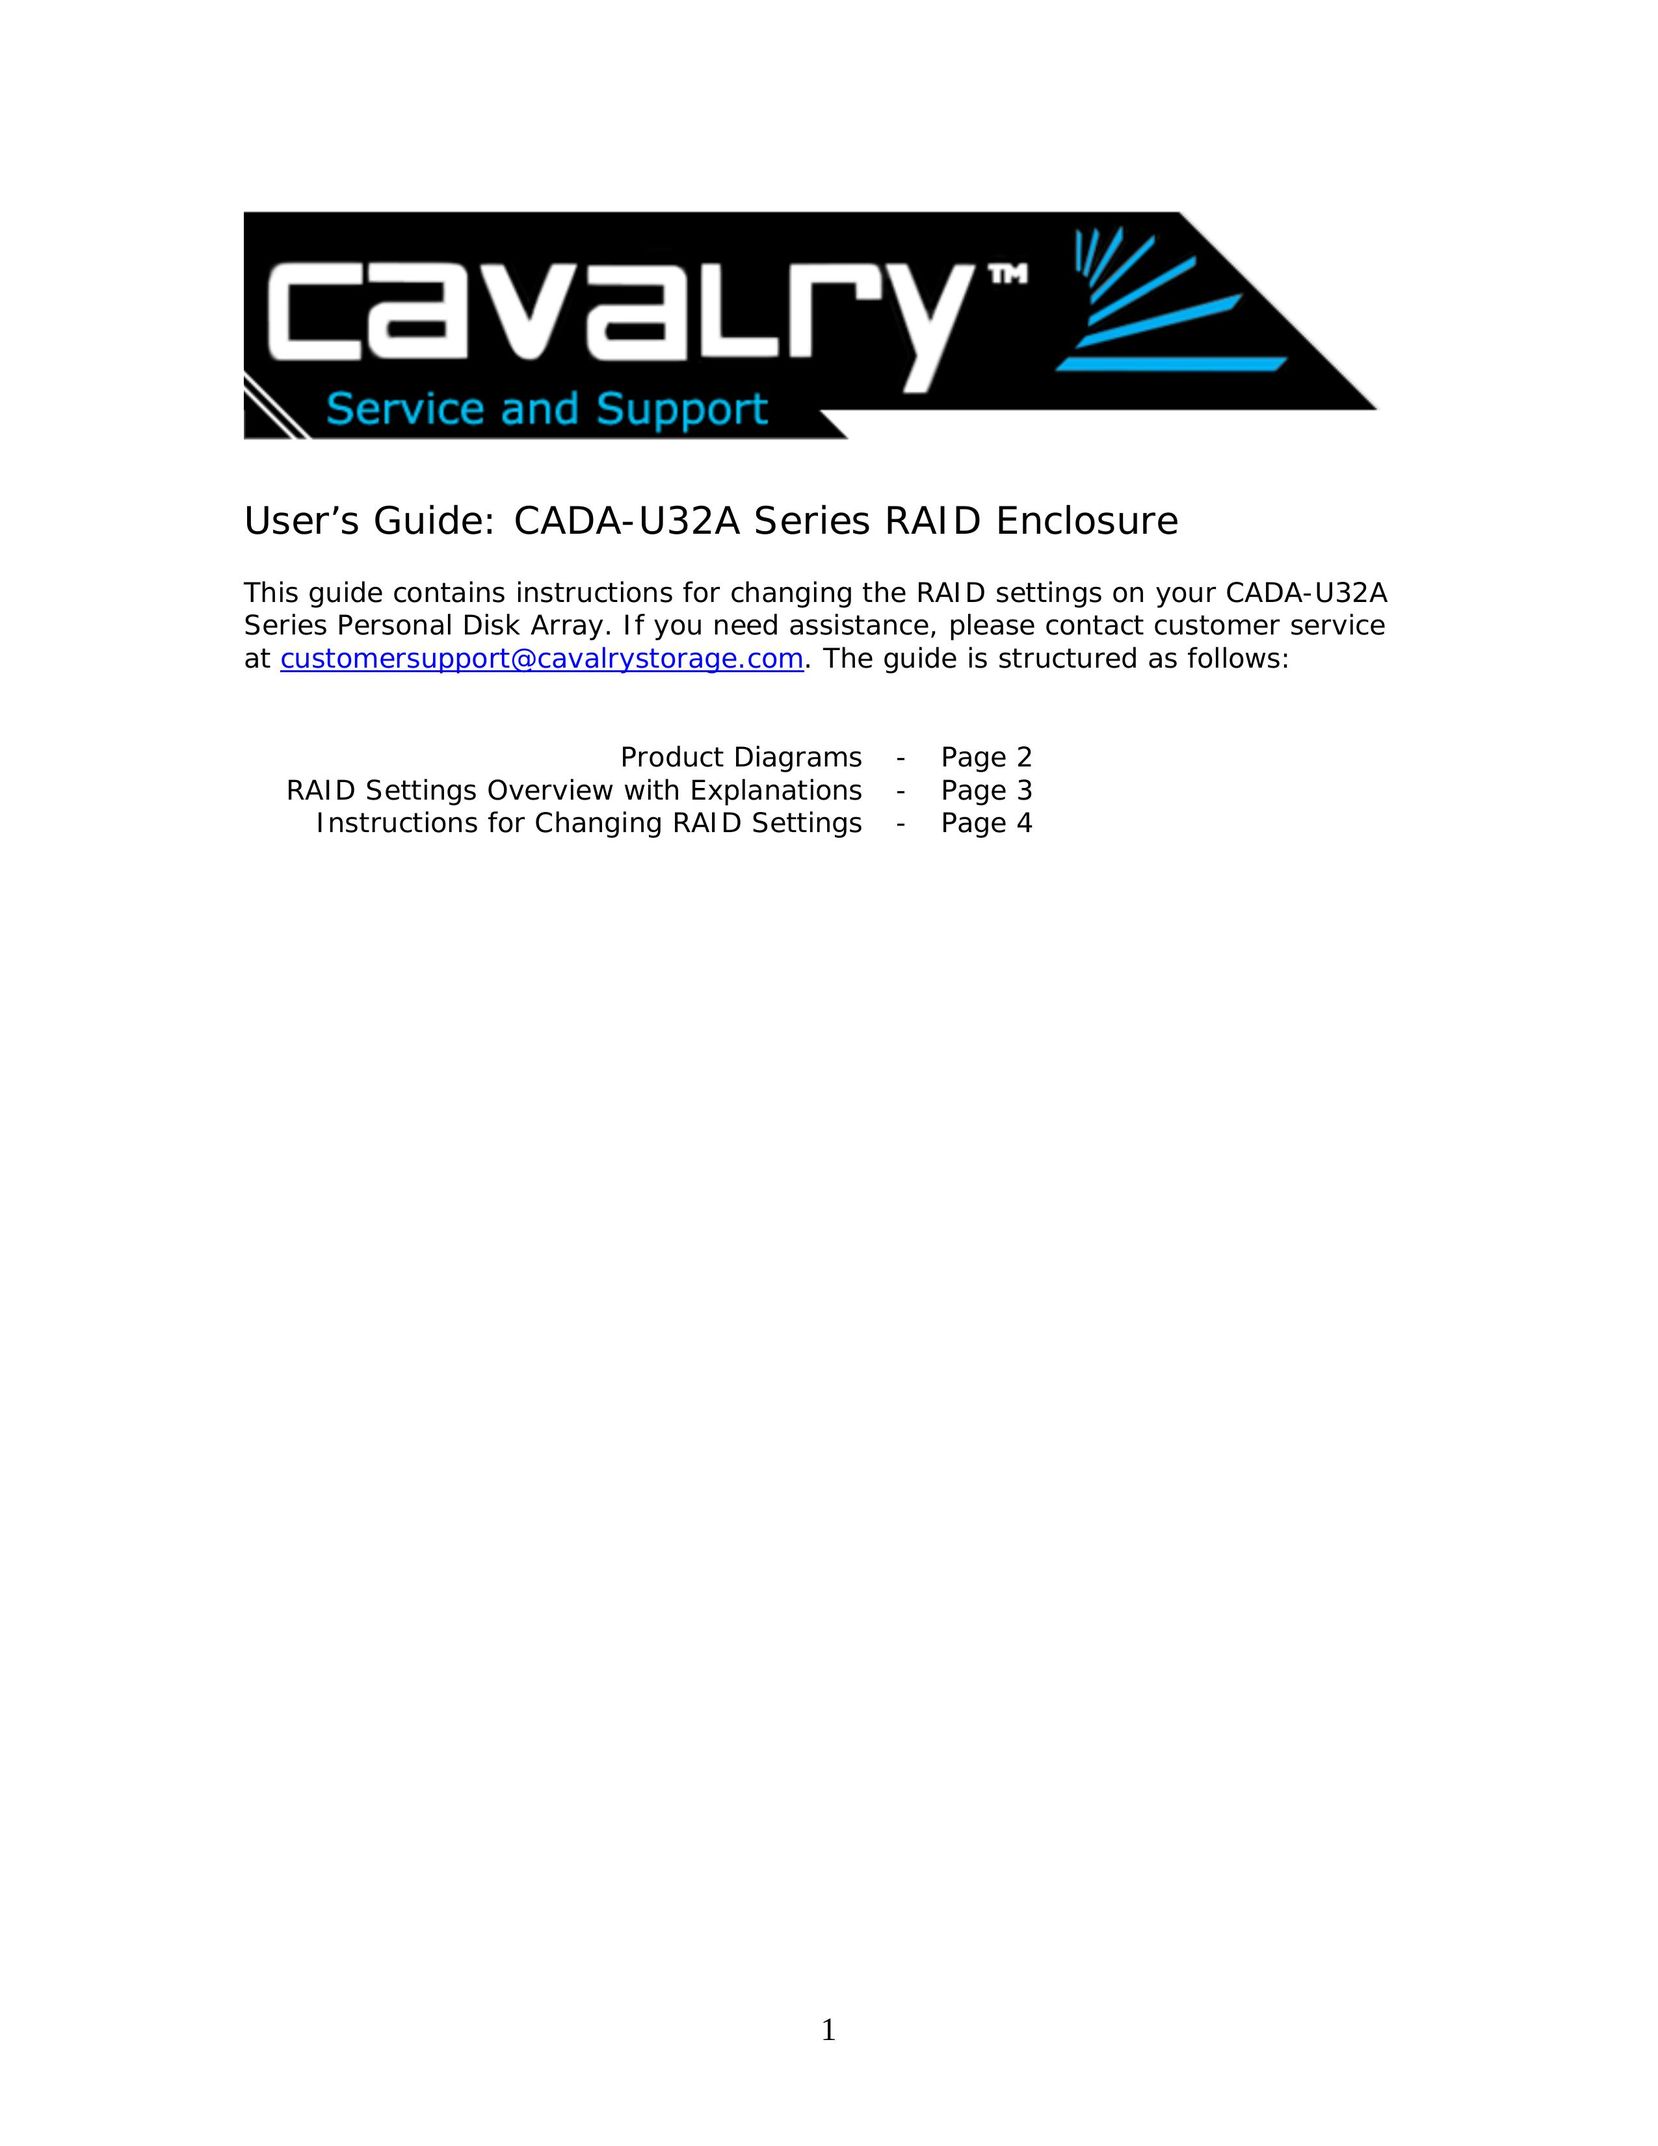 Cavalry Storage CADA-U32A Computer Hardware User Manual